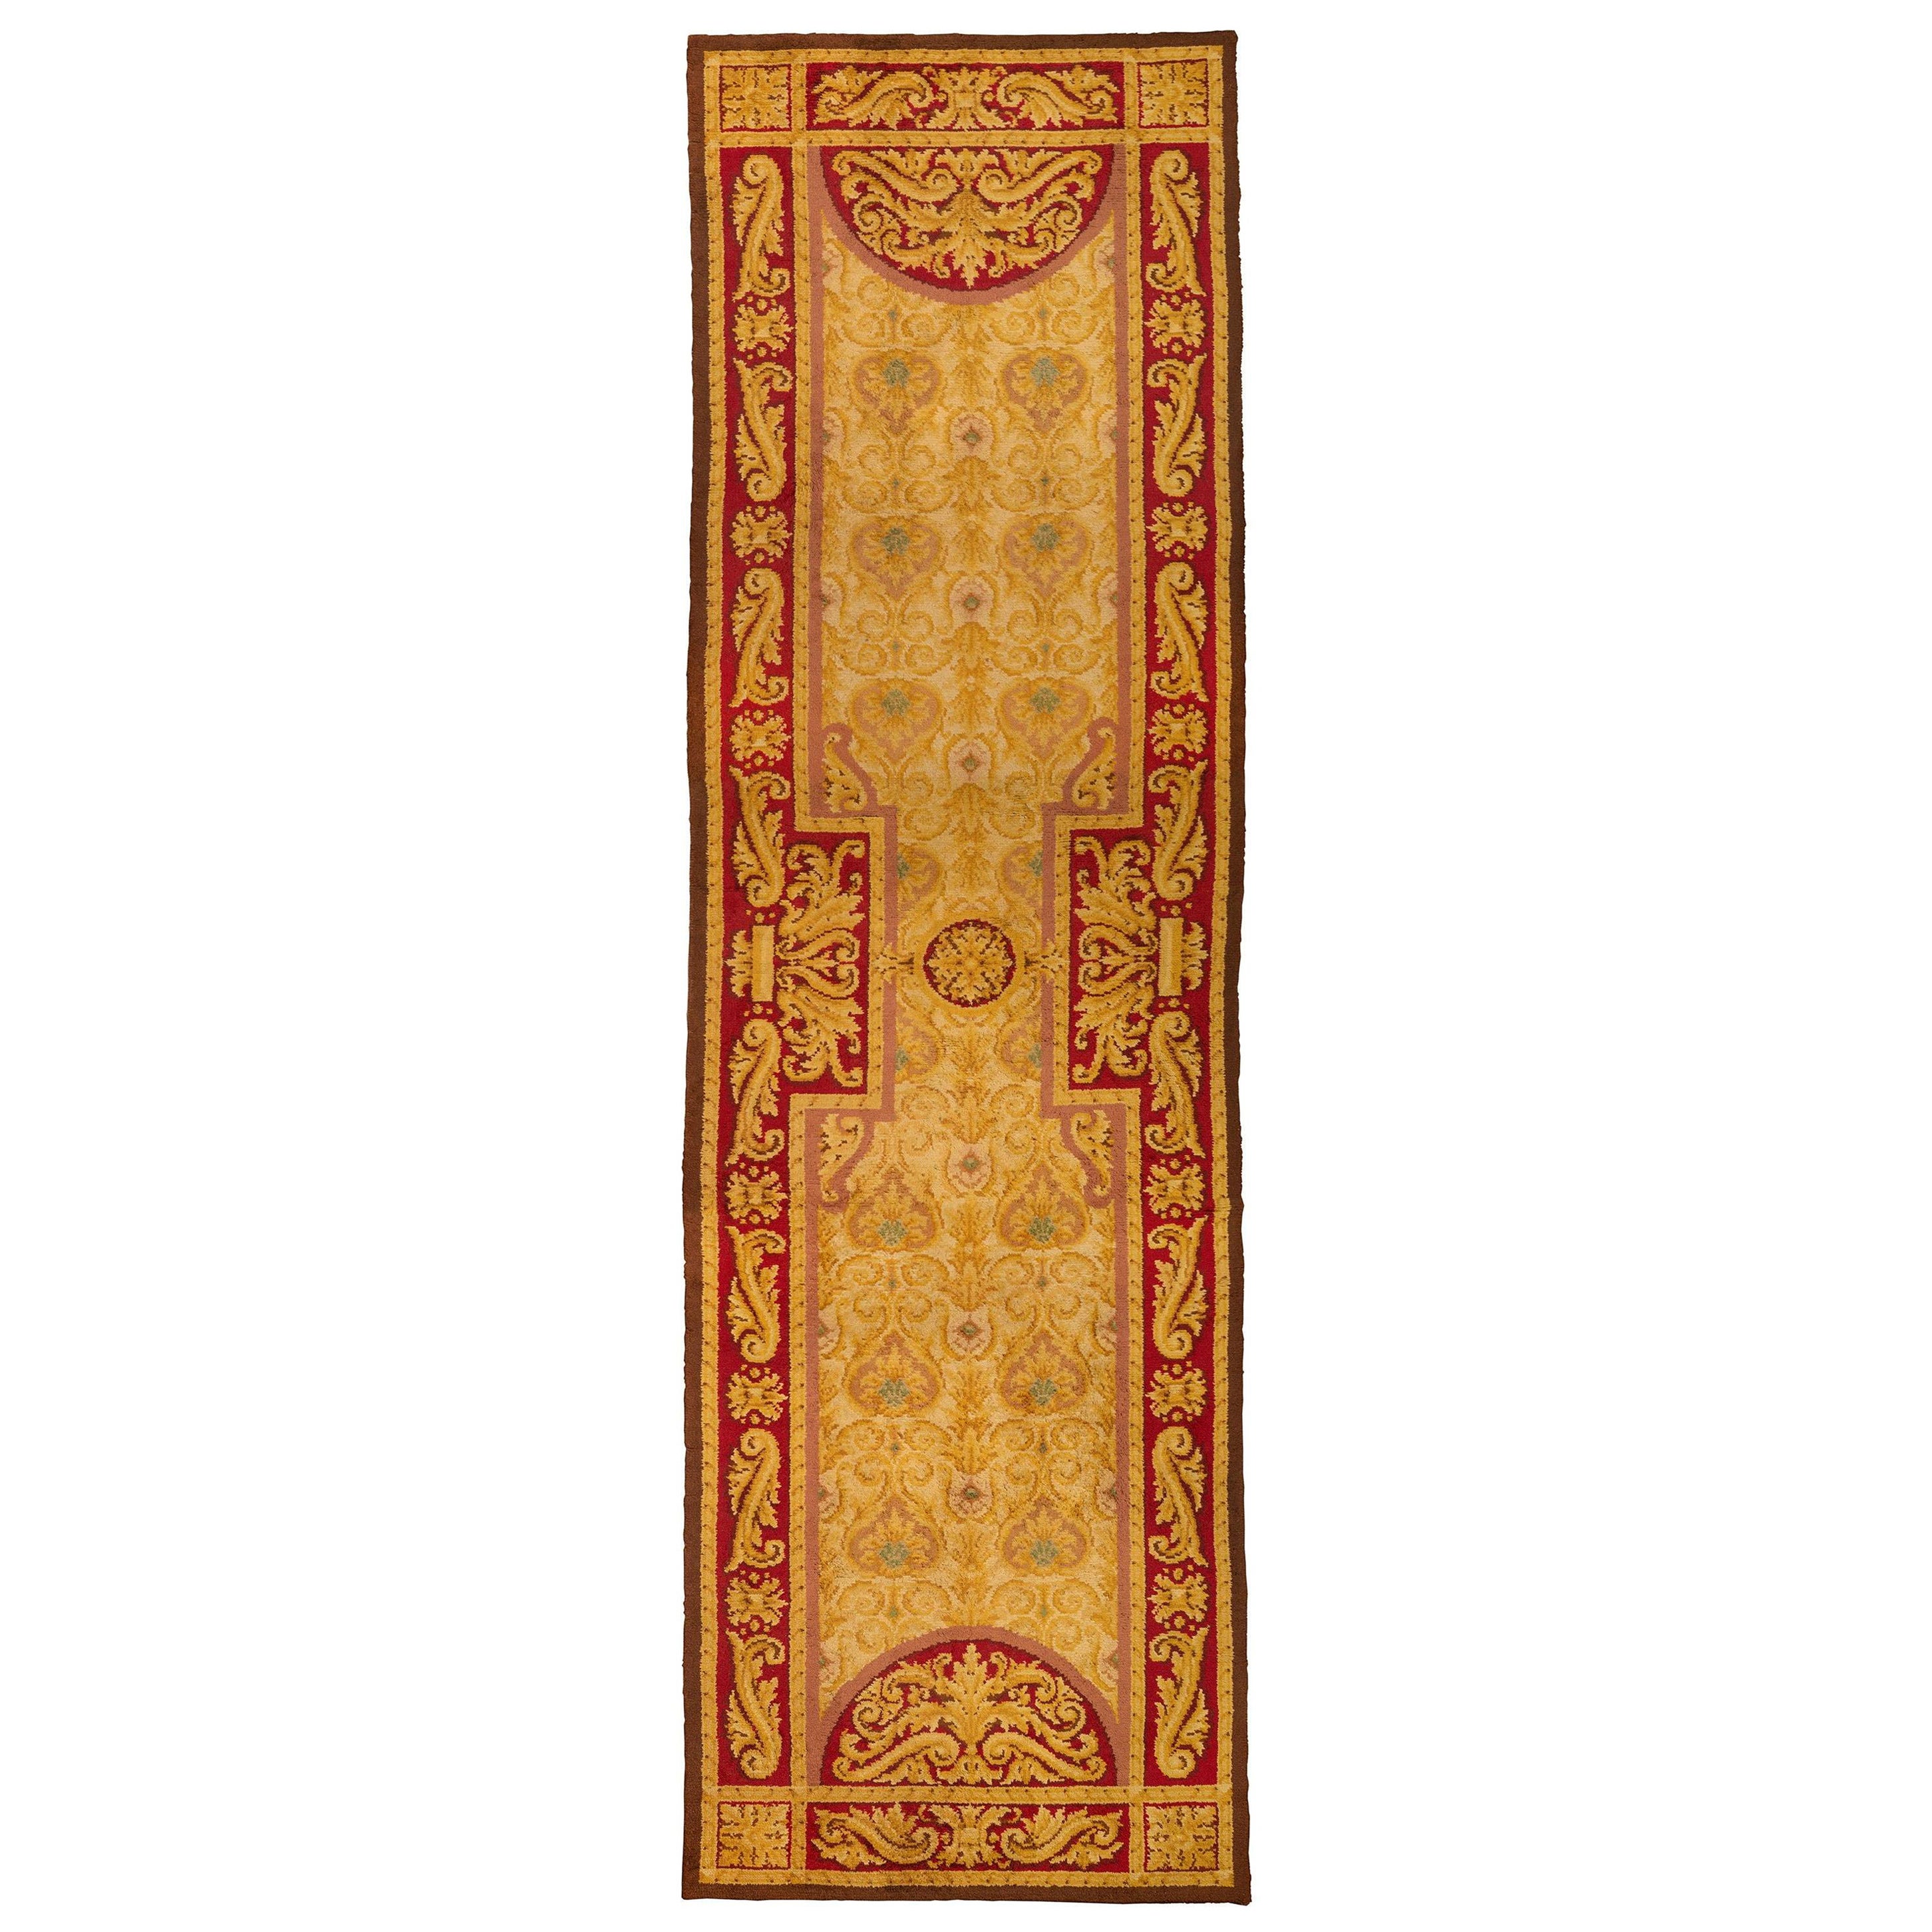 Large Colorful 19th Century Antique European Neoclassical Hallway, Runner Carpet